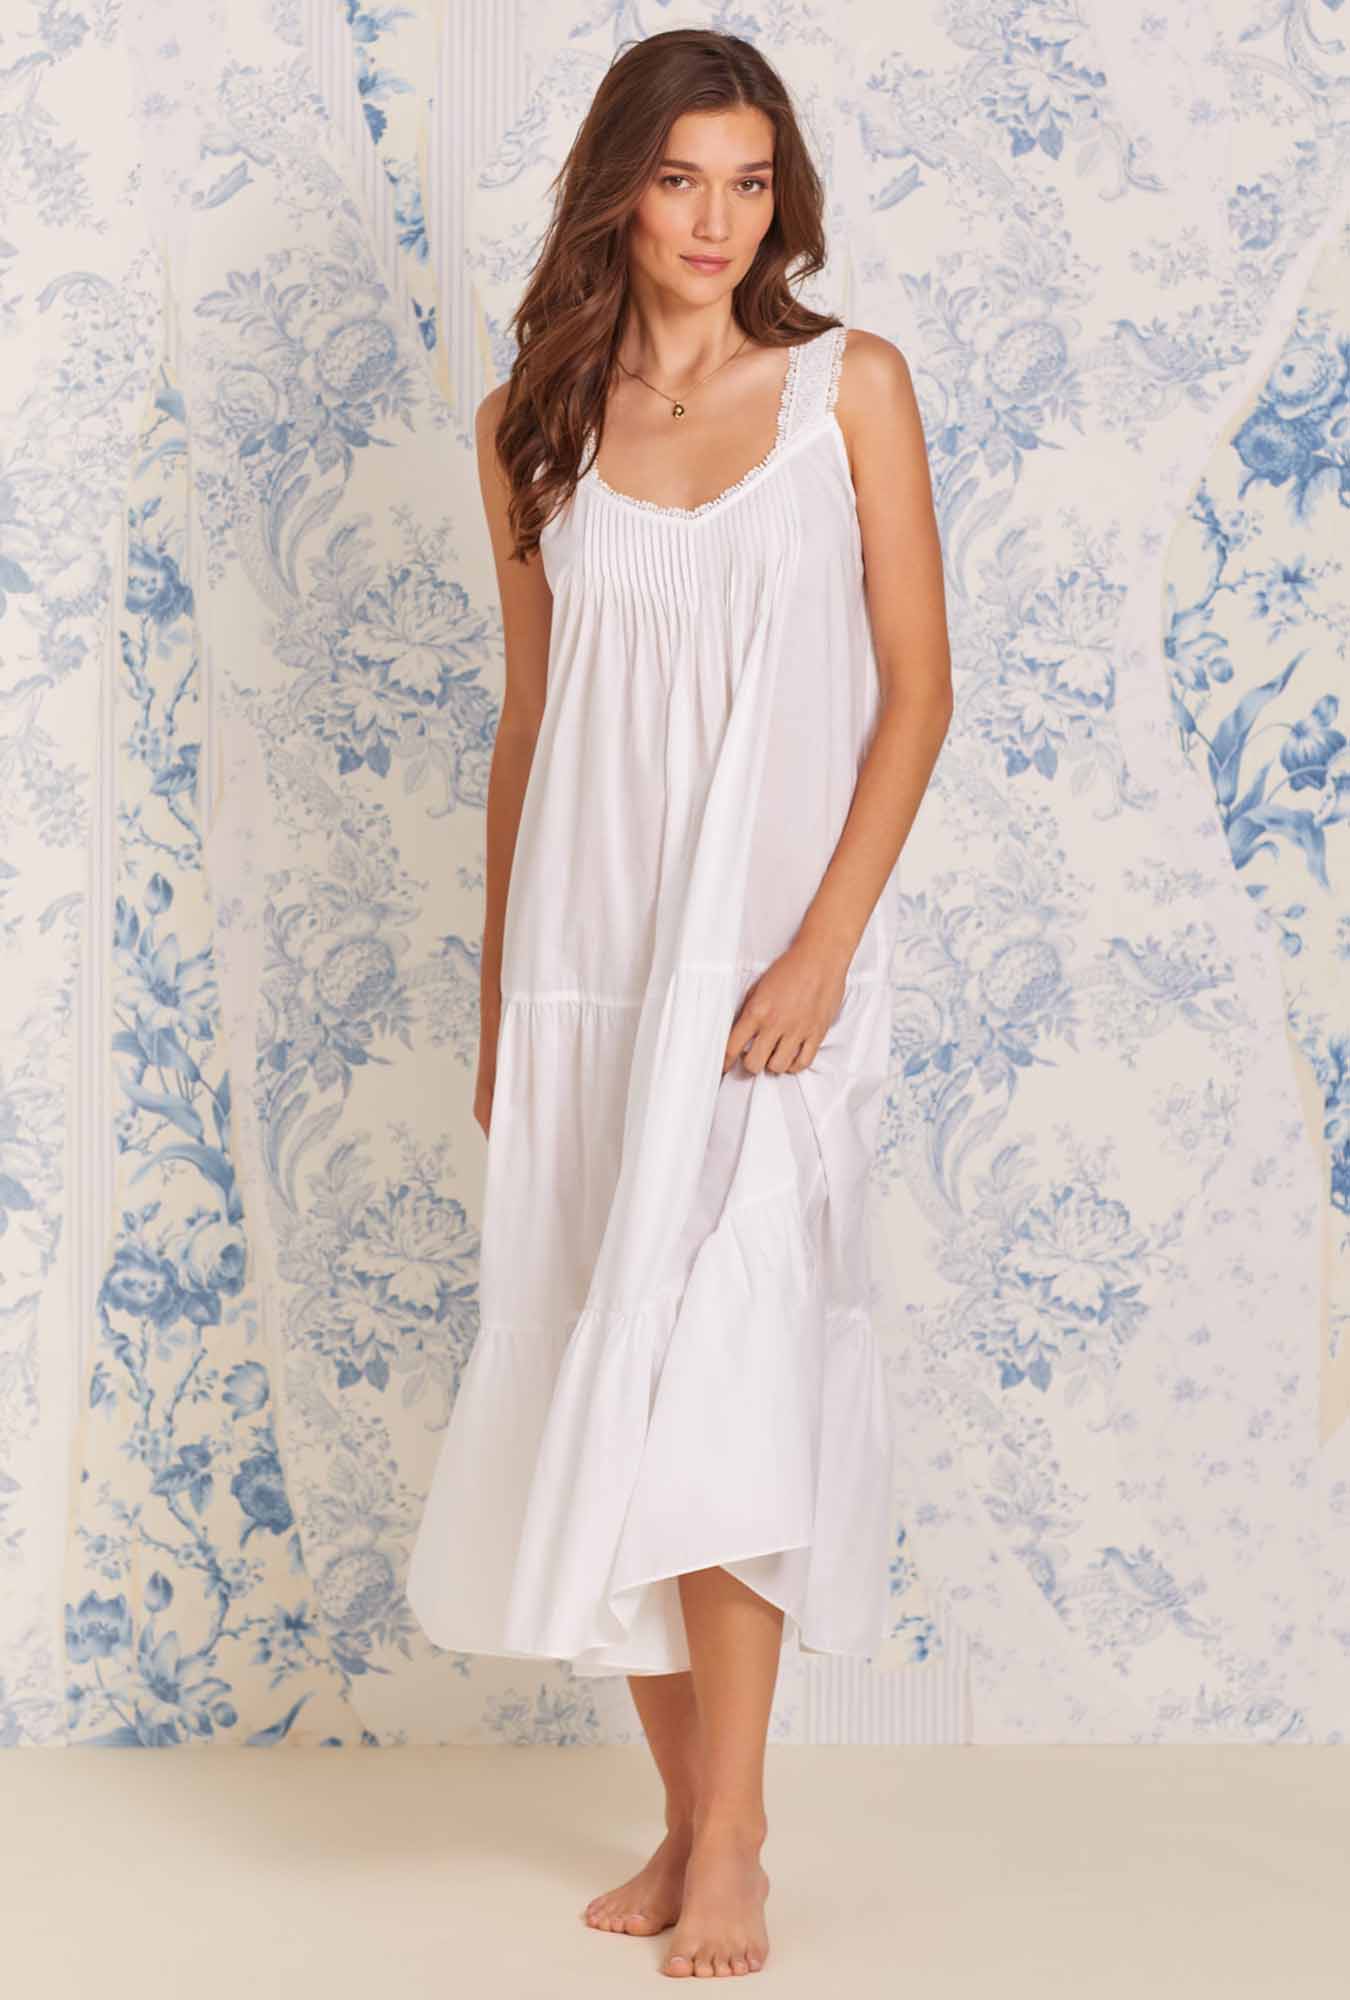 5-6 Size Gown Sleepwear for Girls for sale | eBay